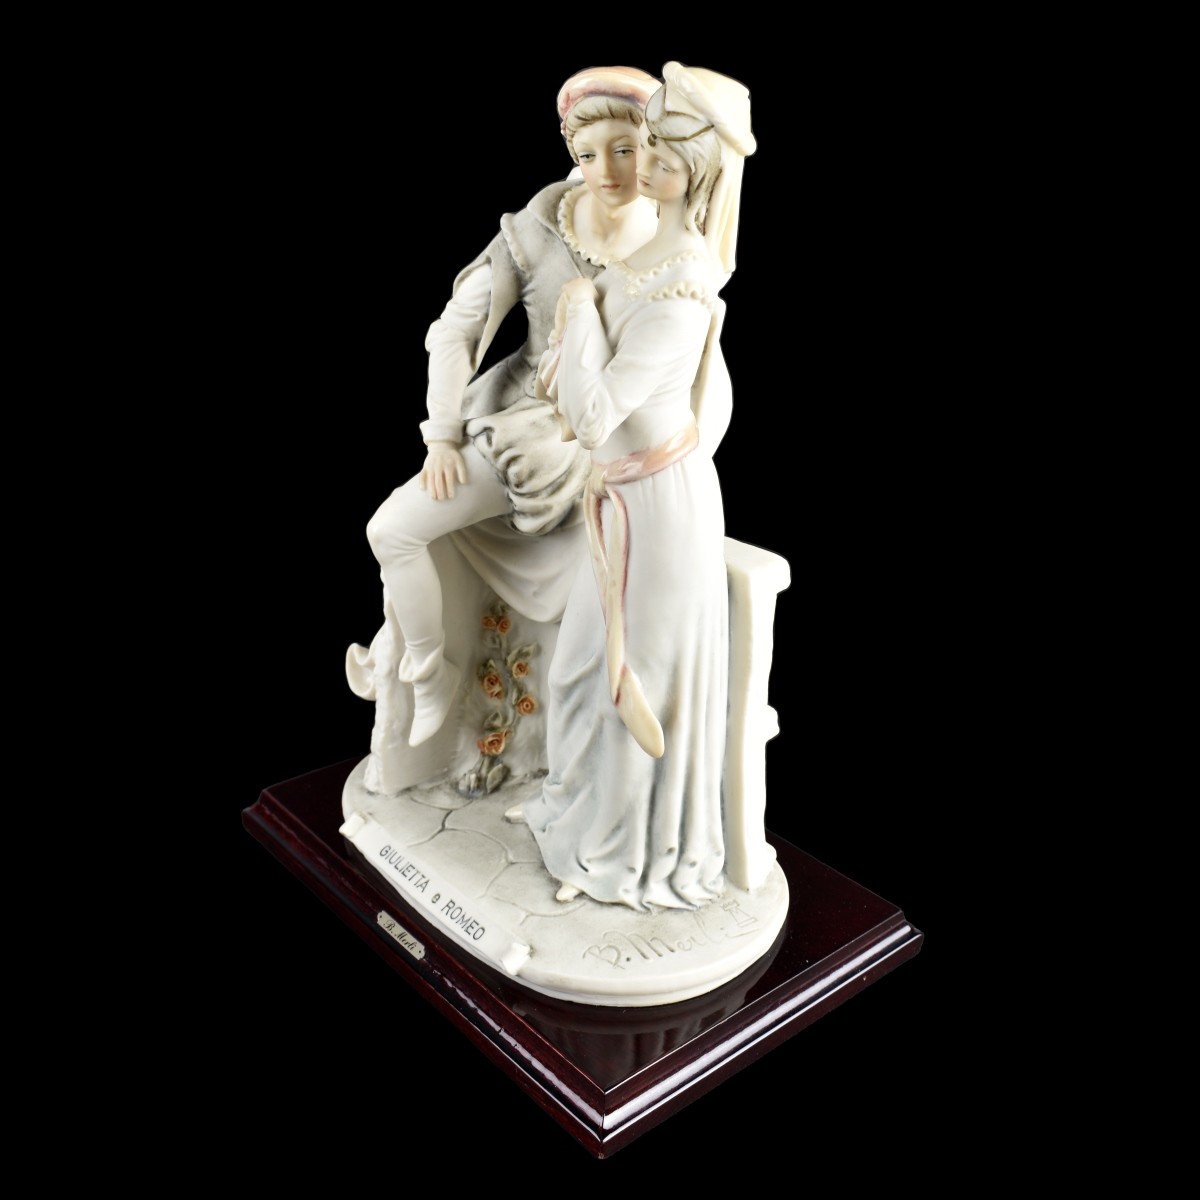 Capodimonte Porcelain Figurine